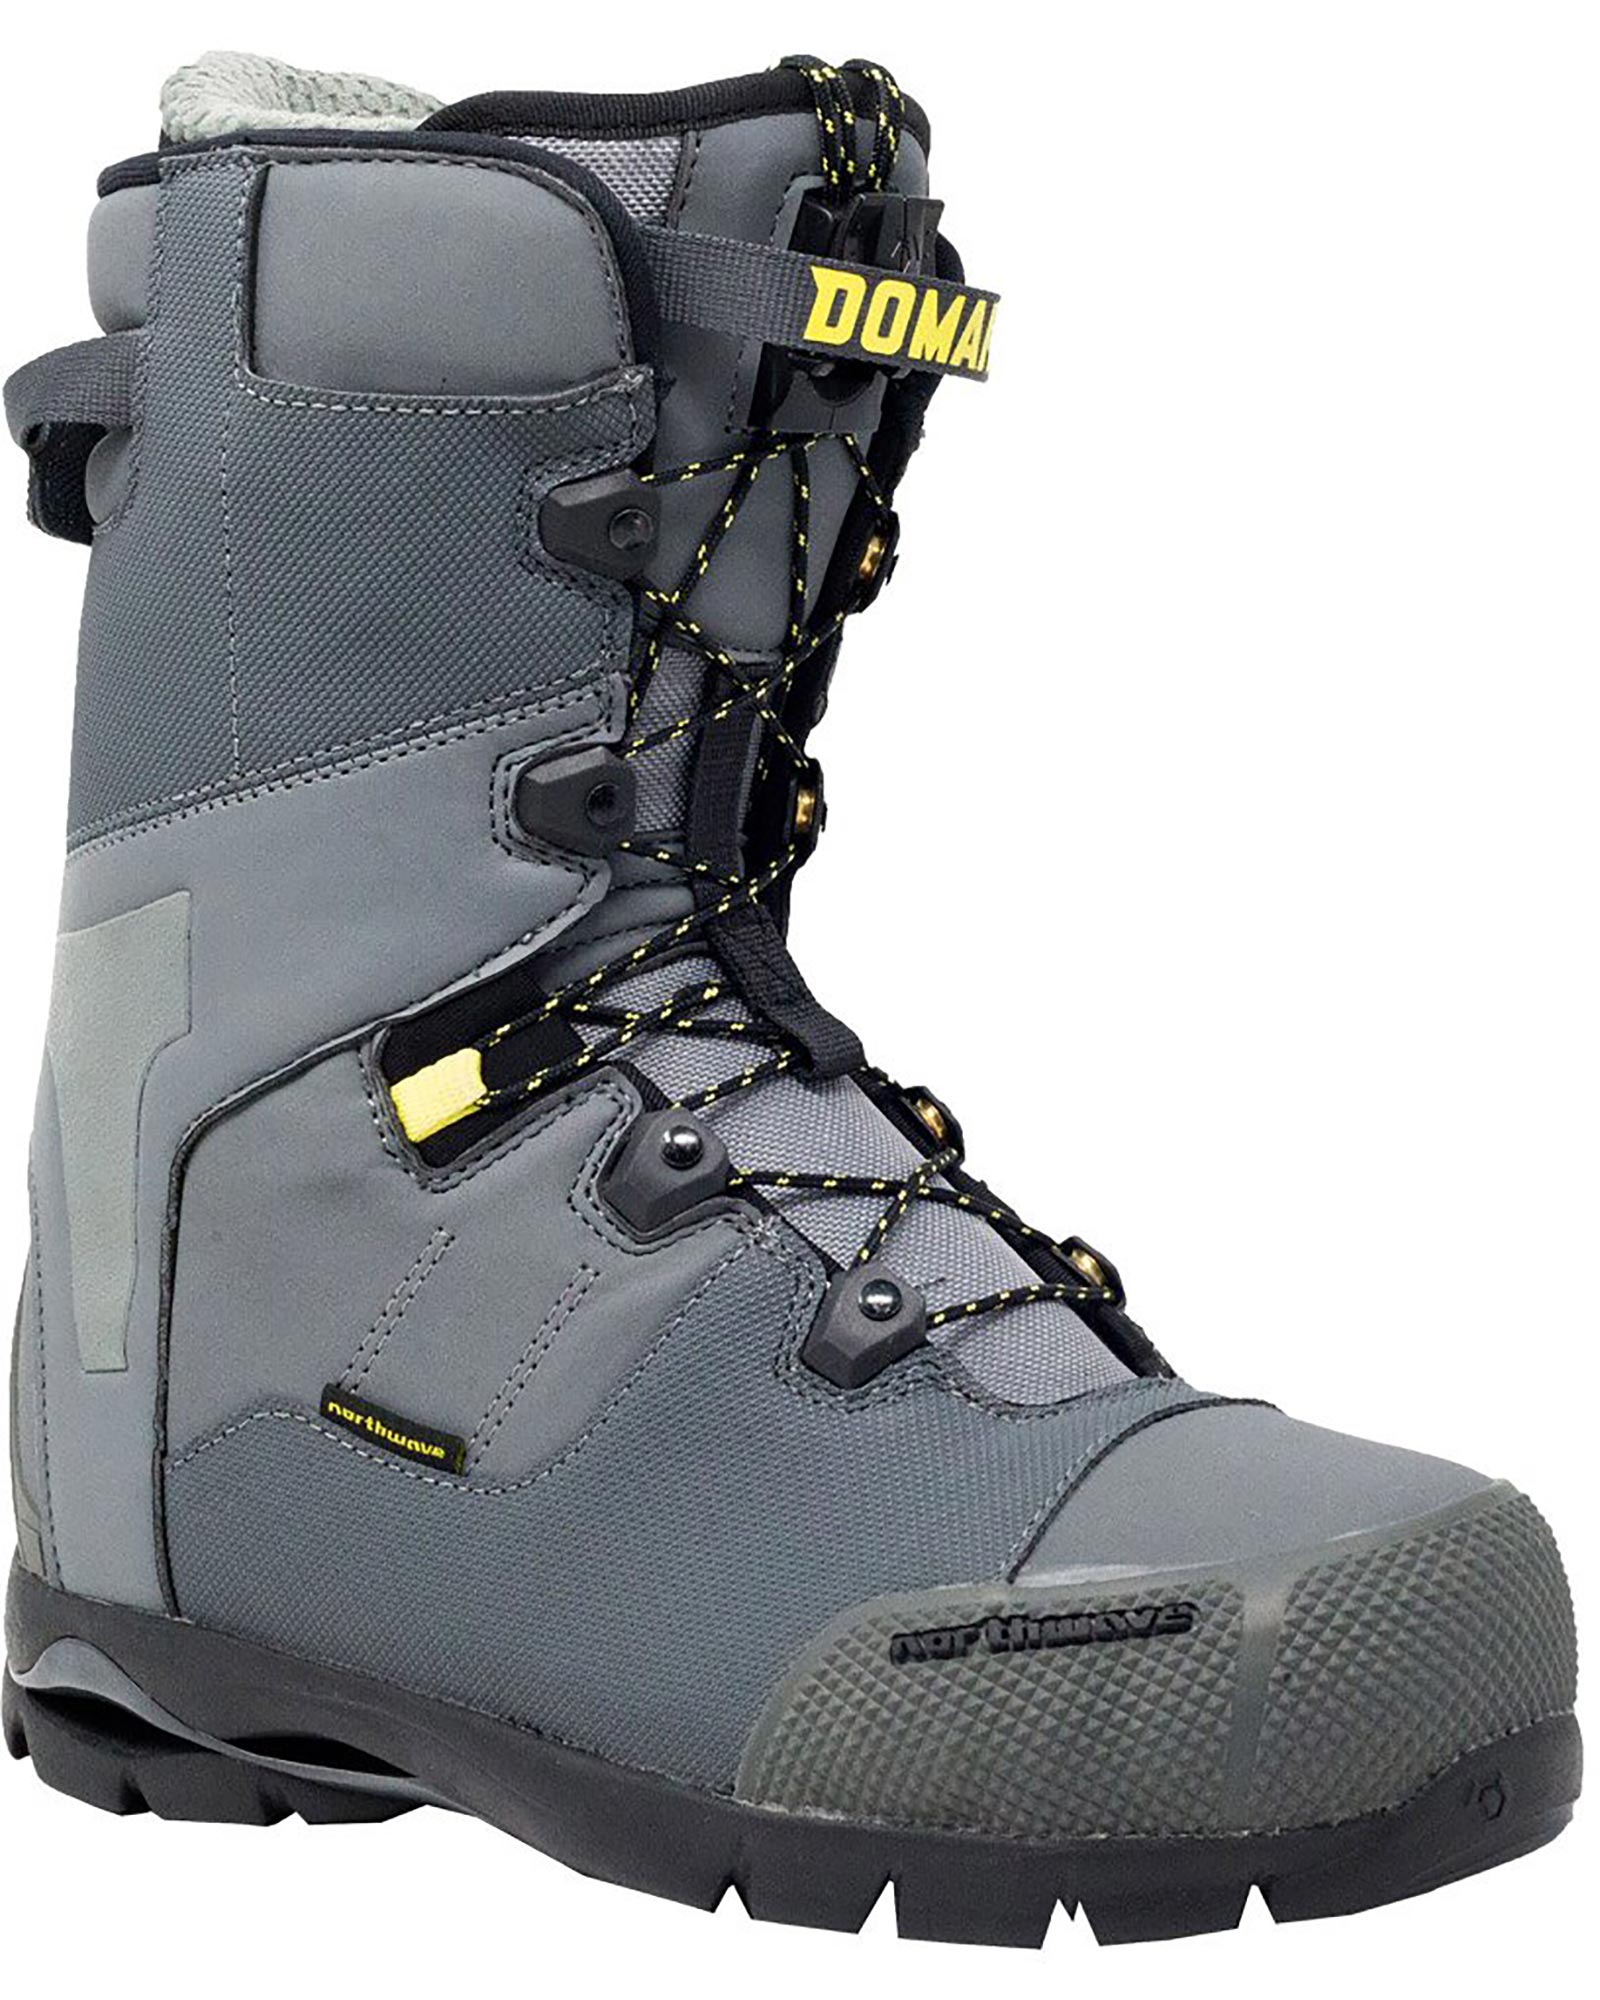 Northwave Men's Domain Snowboard Boots